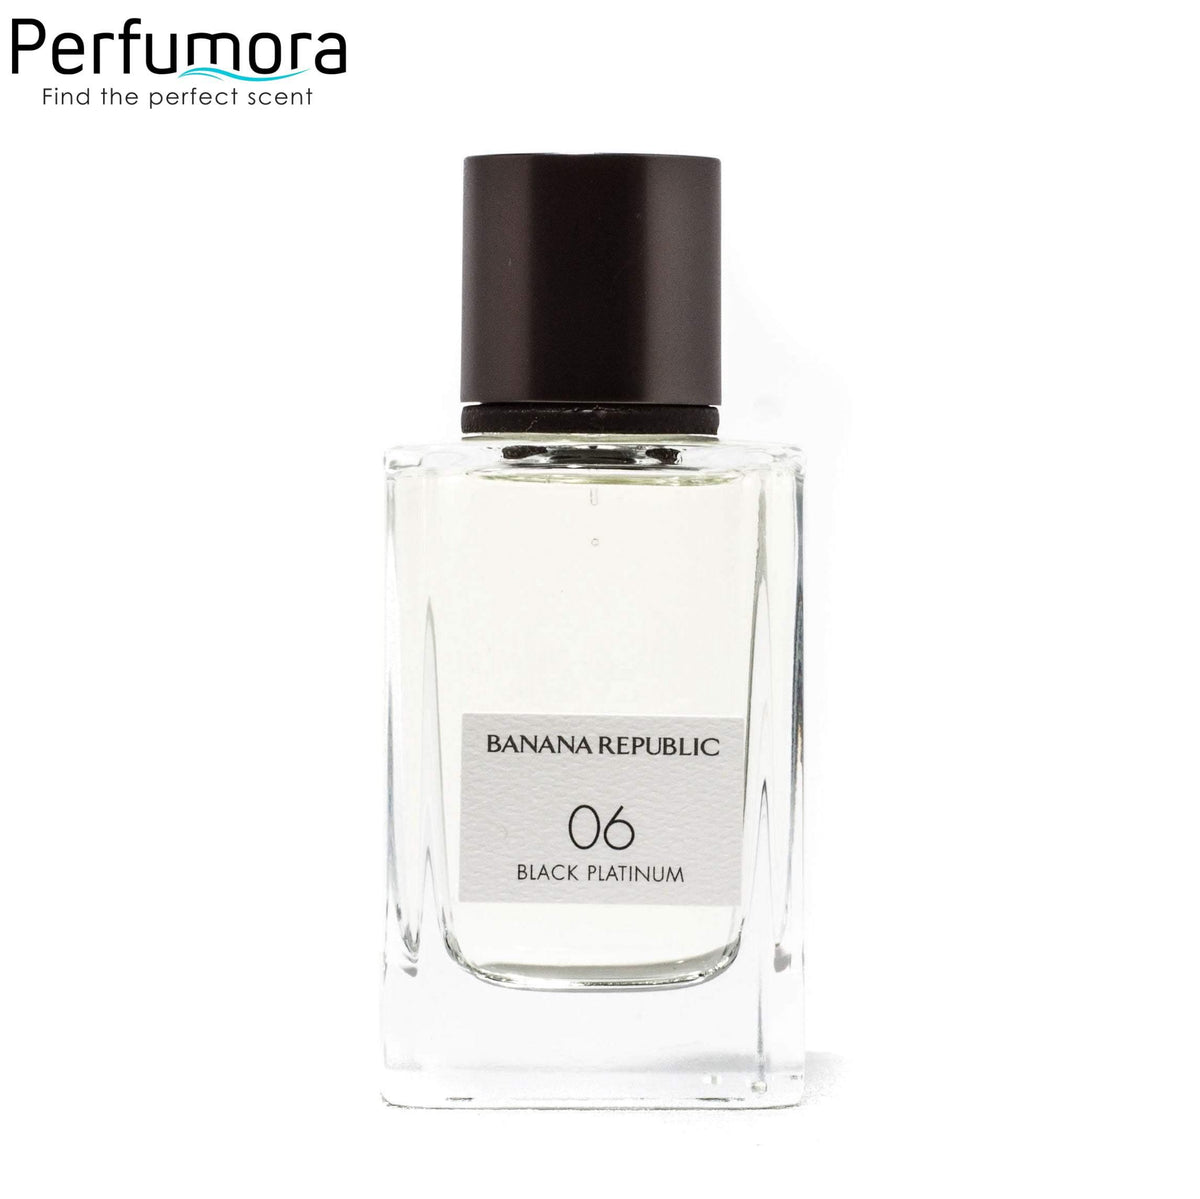 06 Black Platinum Eau de Parfum Spray for Women by Banana Republic Perfumora